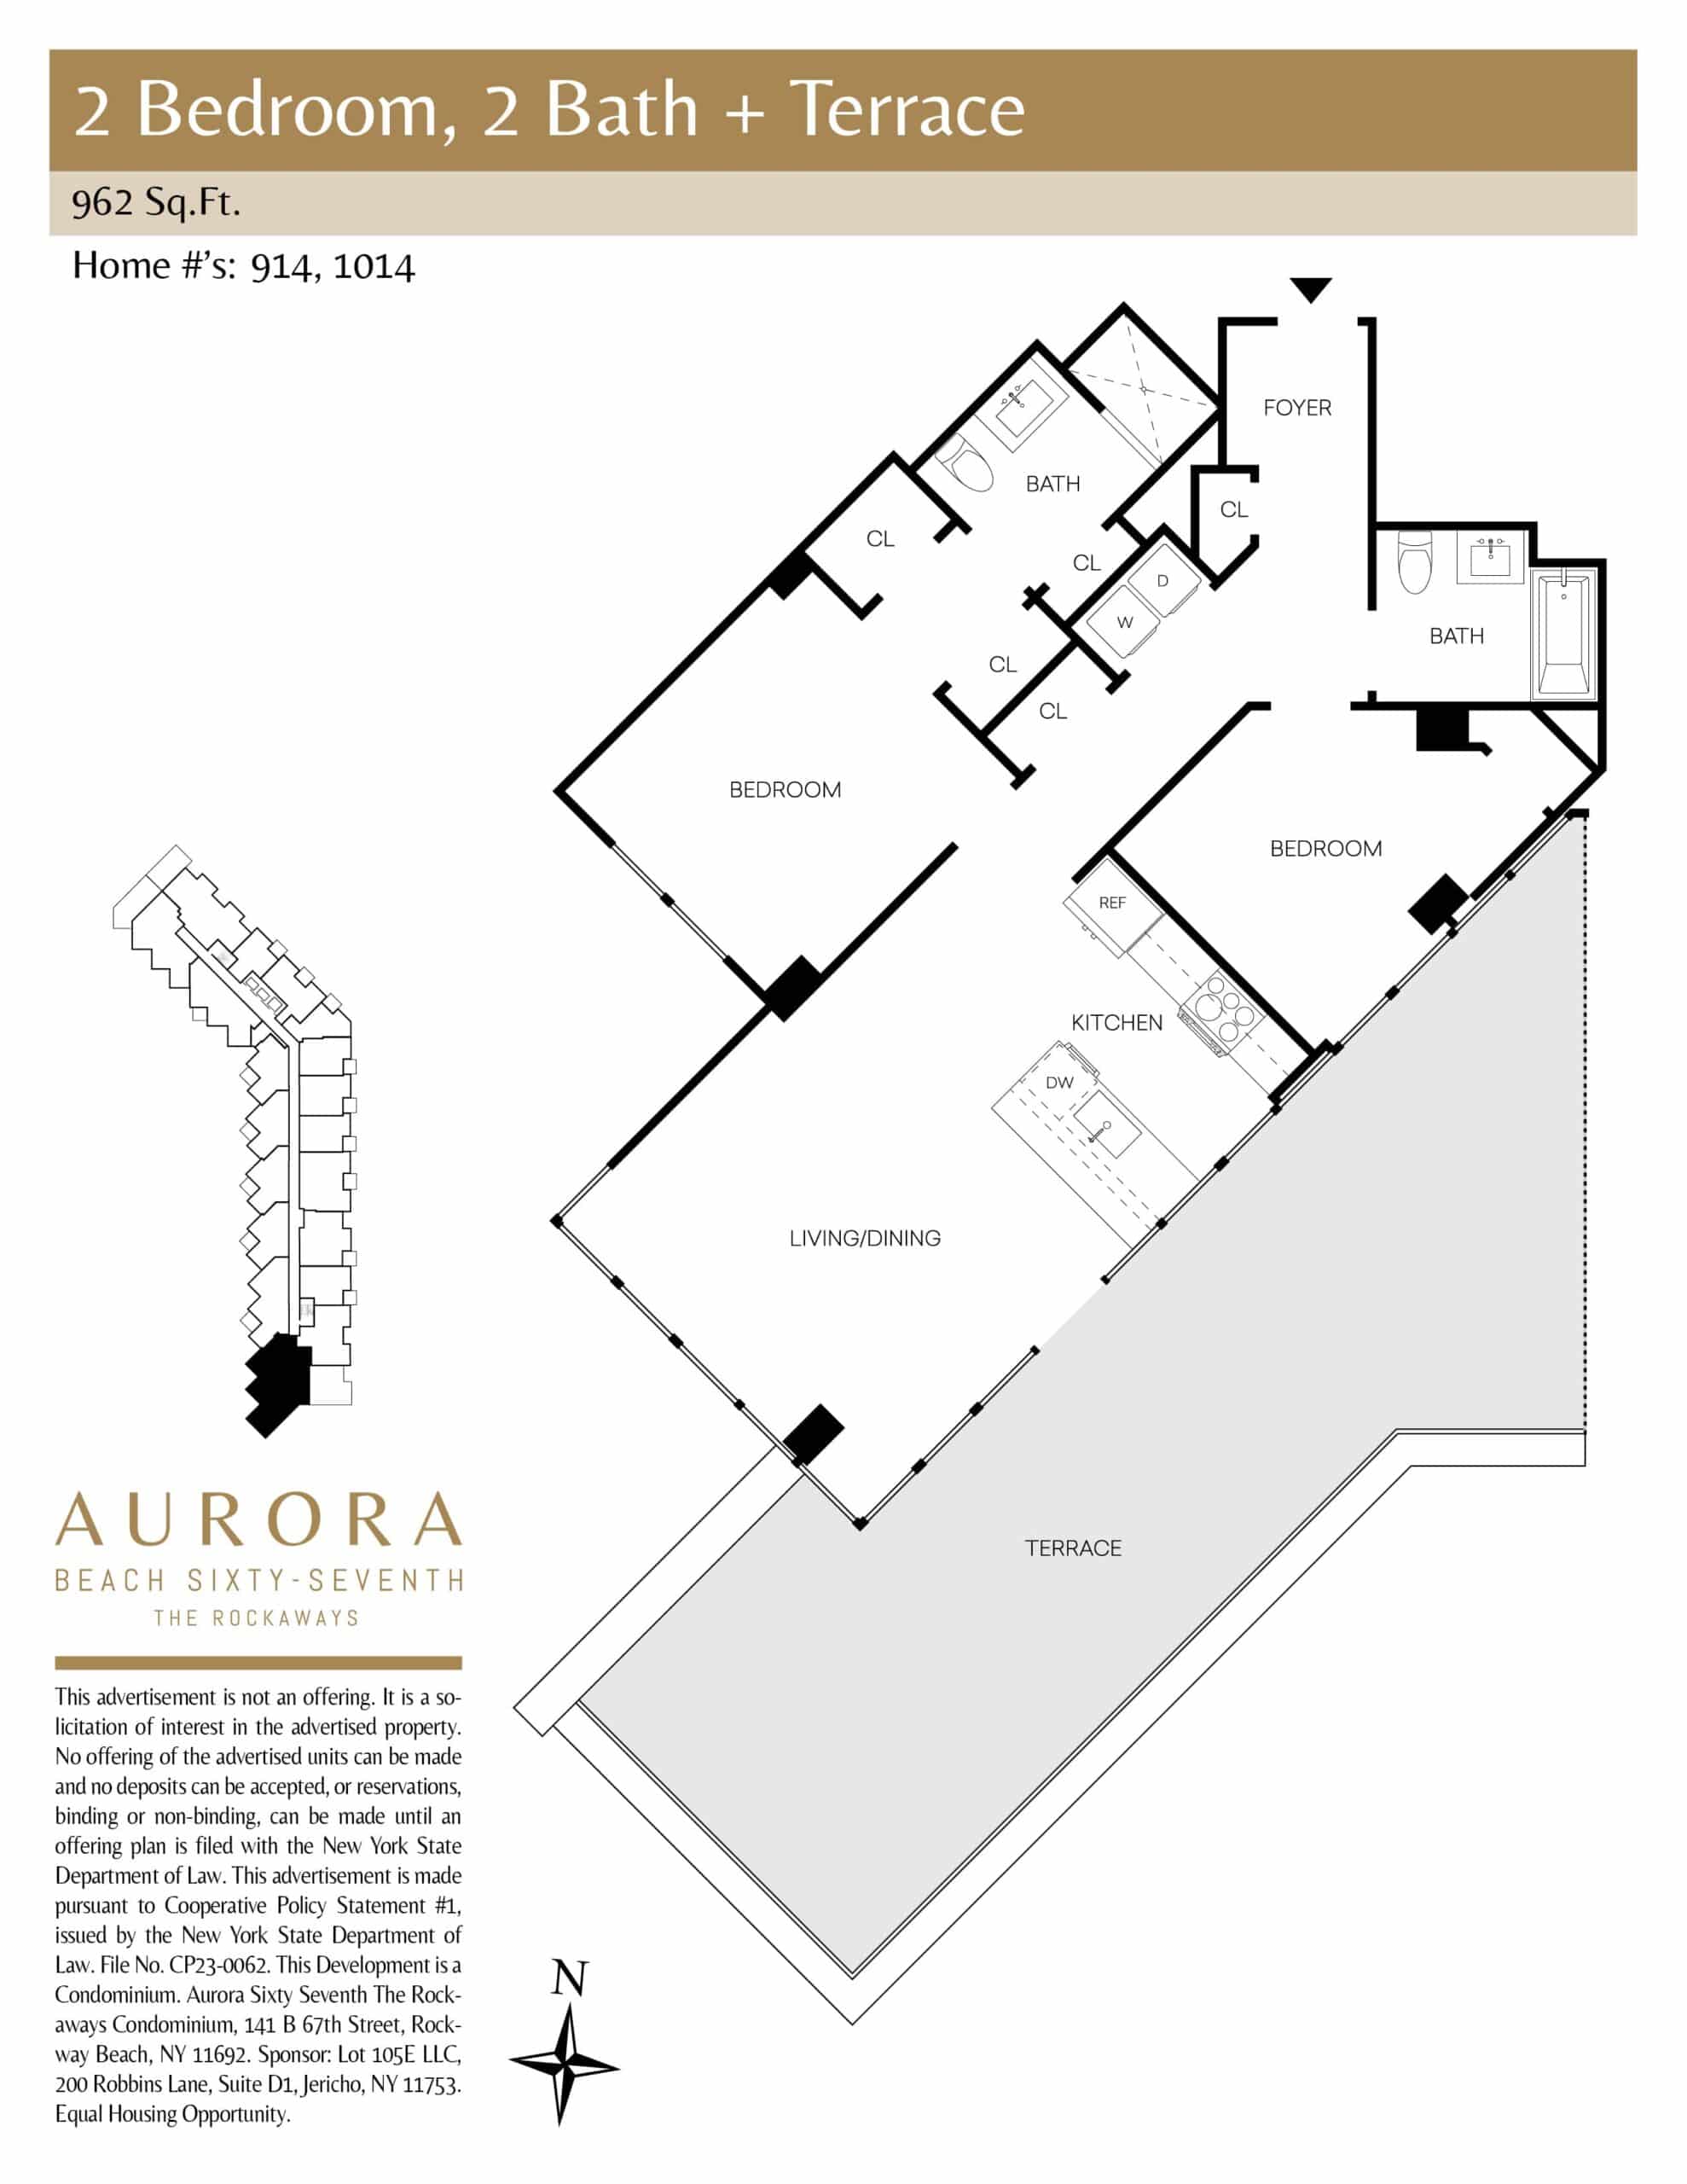 PG_13 Aurora Floor Plans_914-1014